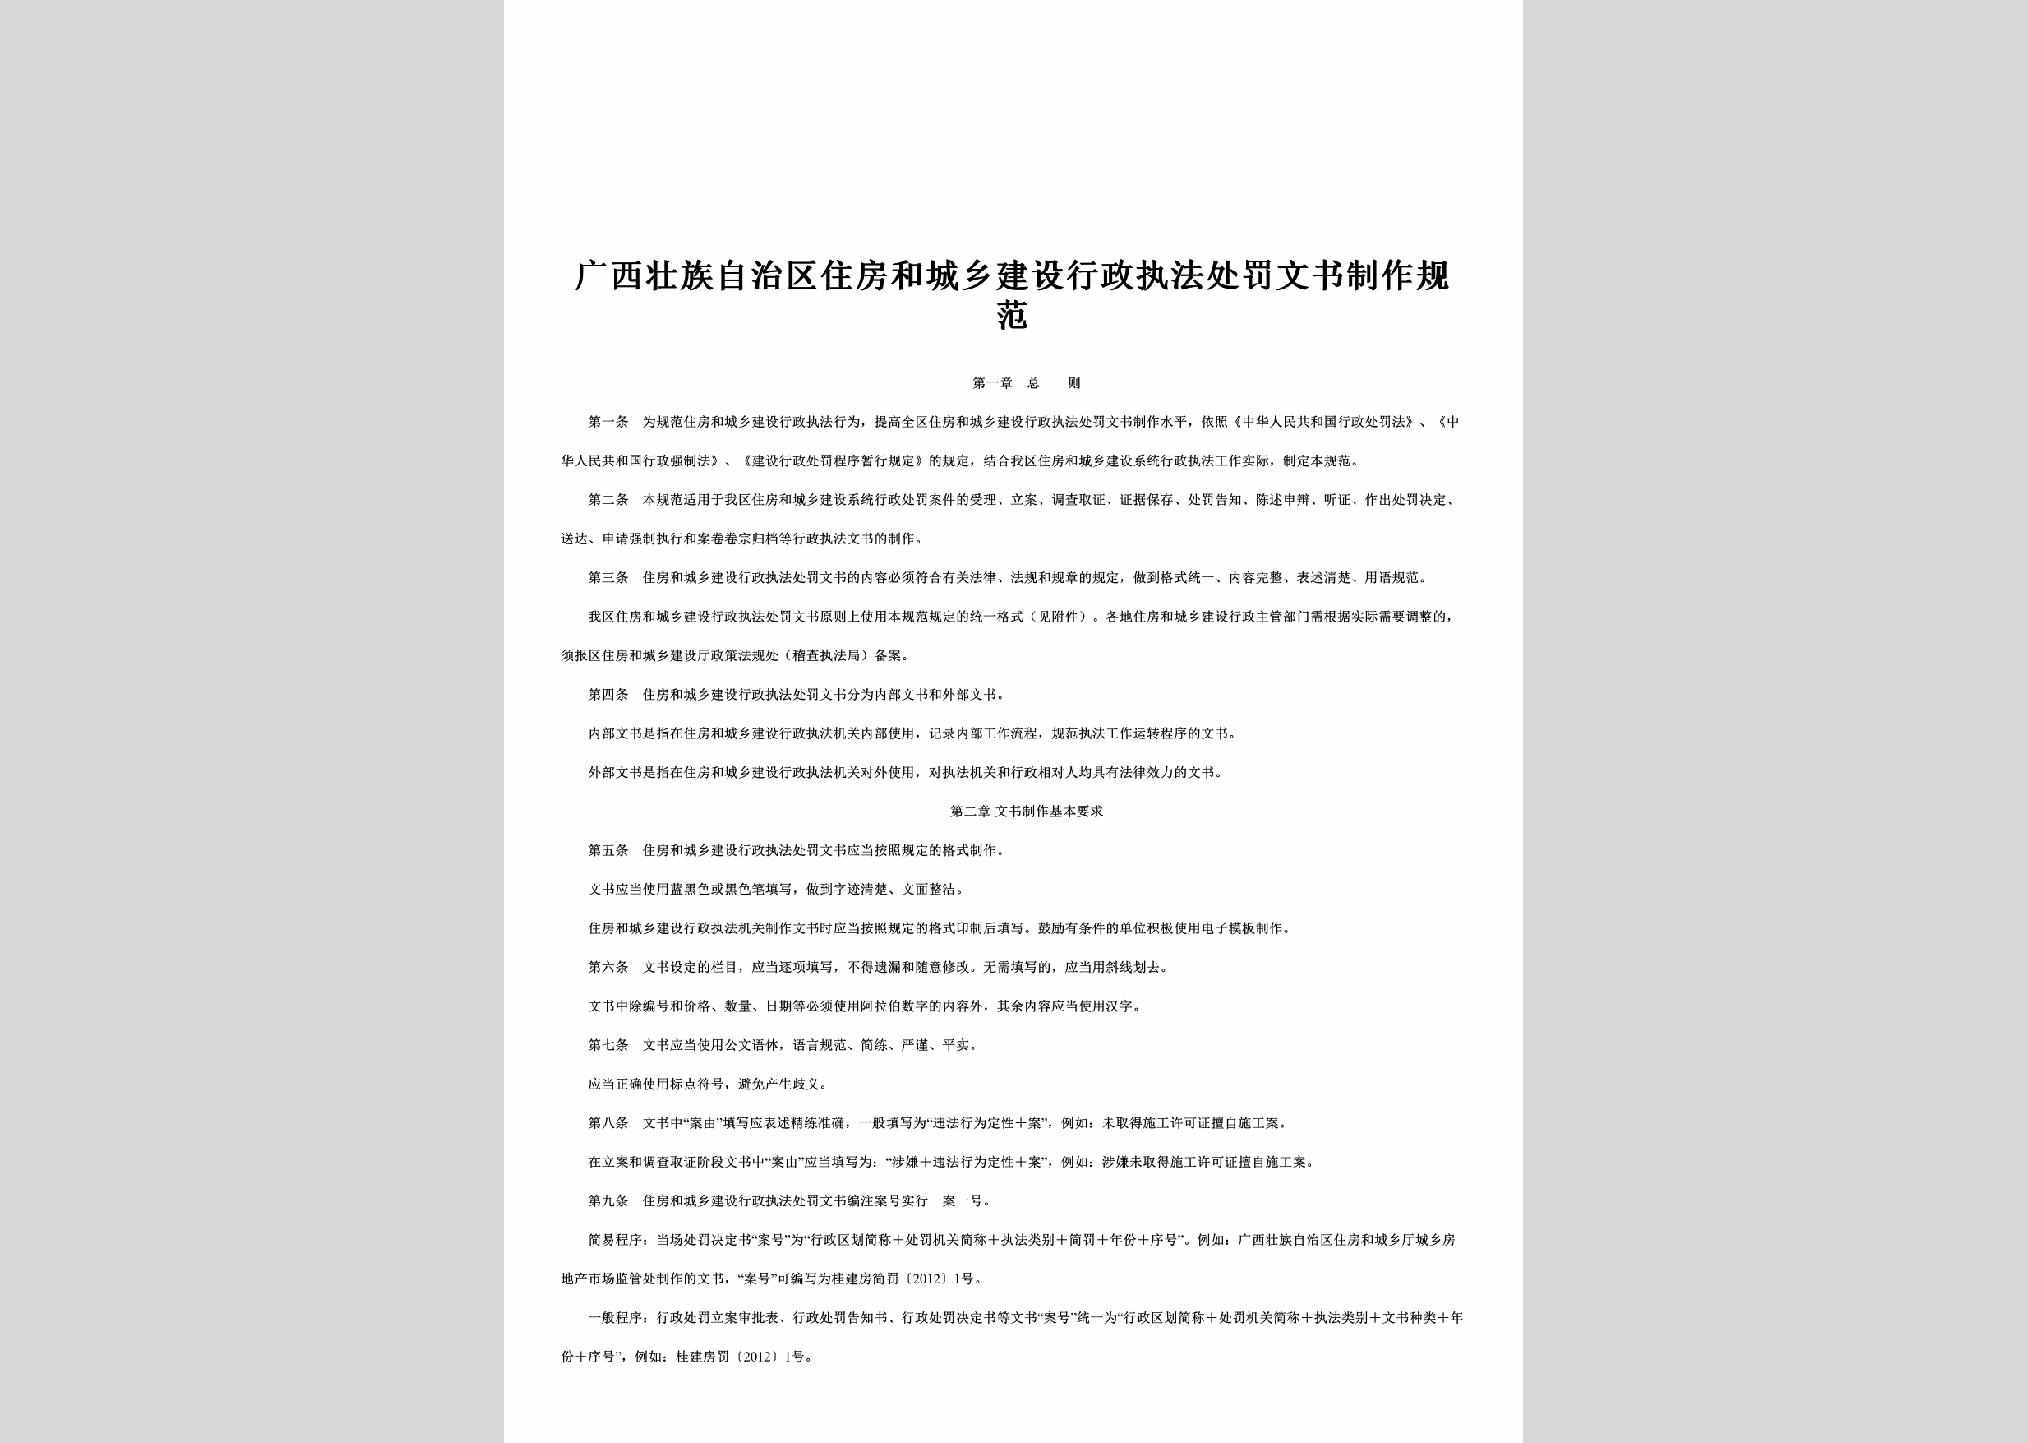 GX-XZCFWSGF-2016：广西壮族自治区住房和城乡建设行政执法处罚文书制作规范